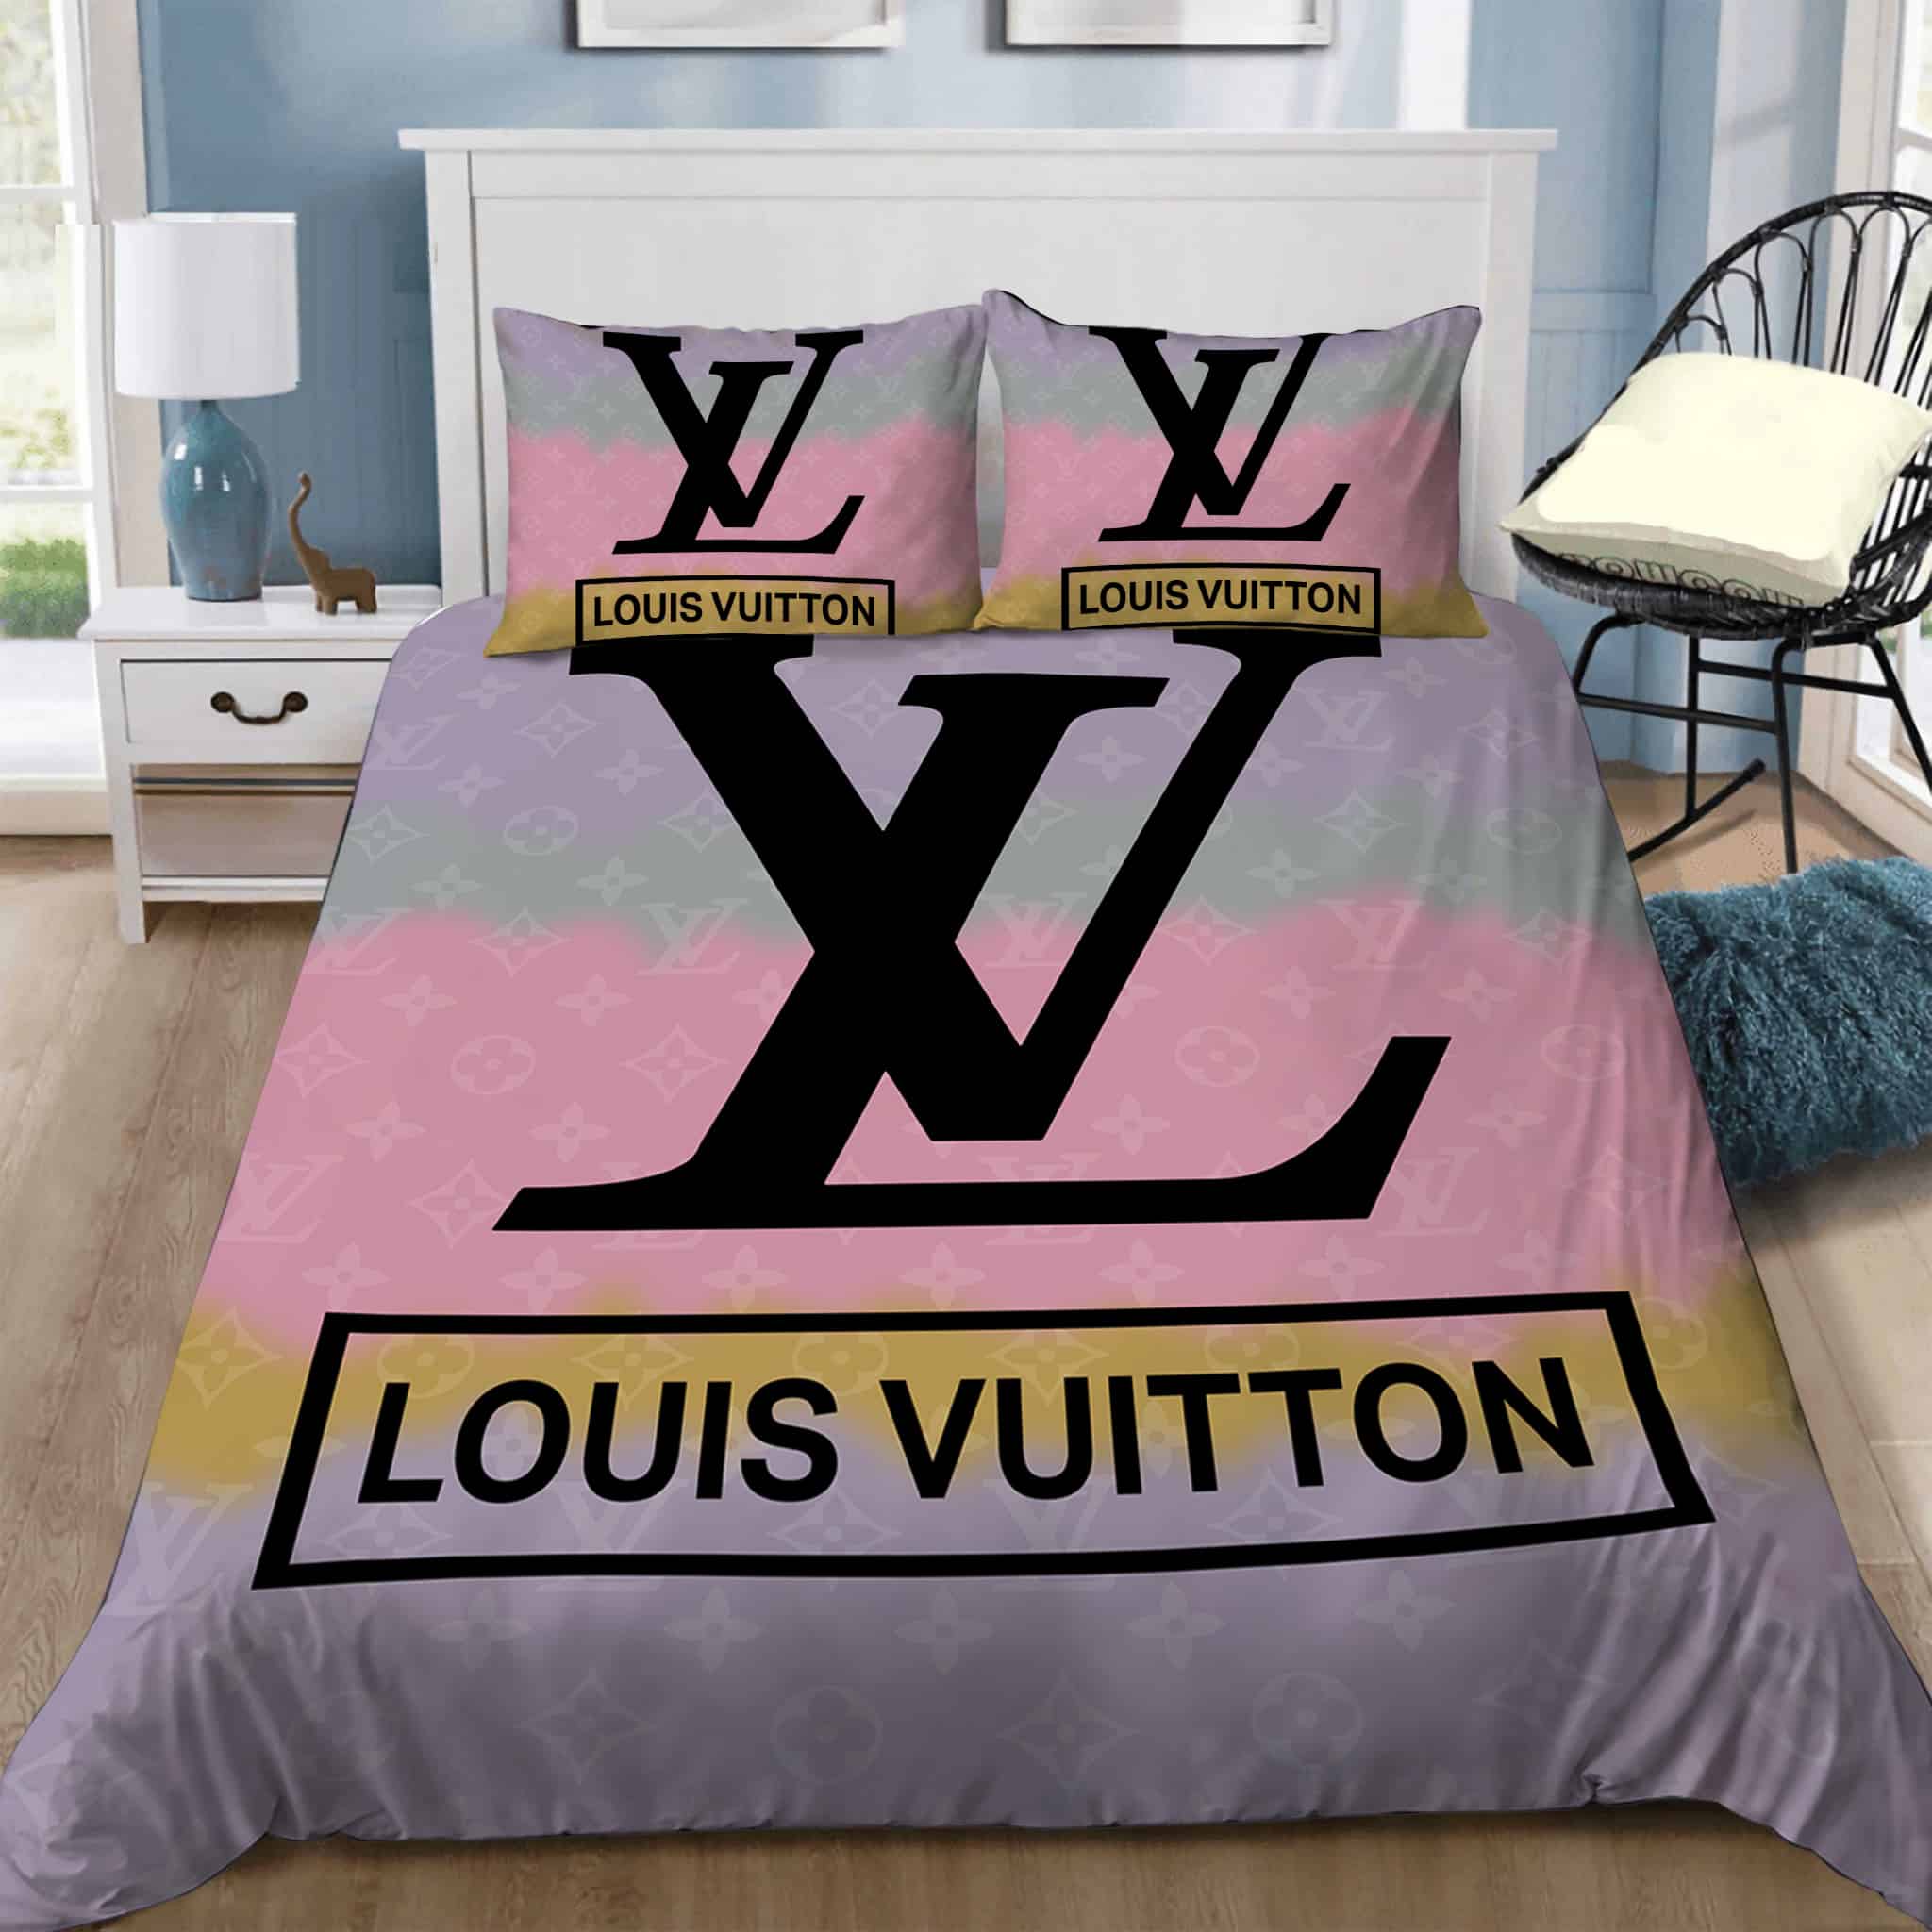 Louis vuitton bedding sets gold6thcom g6bs 29 luxury brand bedding set duvet  cover